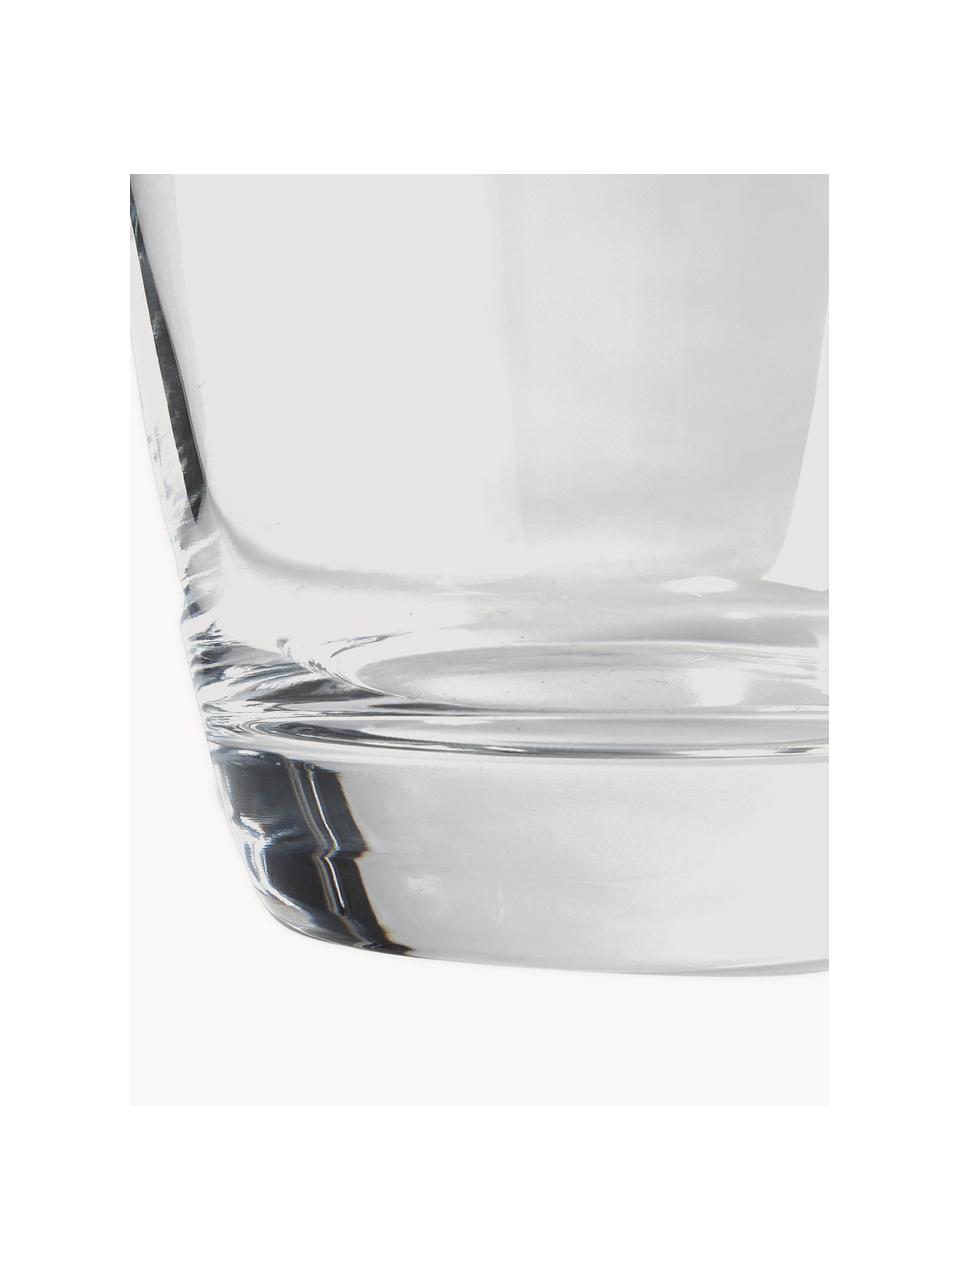 Waterglazen Salto, 6 stuks, Glas, Transparant, Ø 8 x H 12 cm, 350 ml